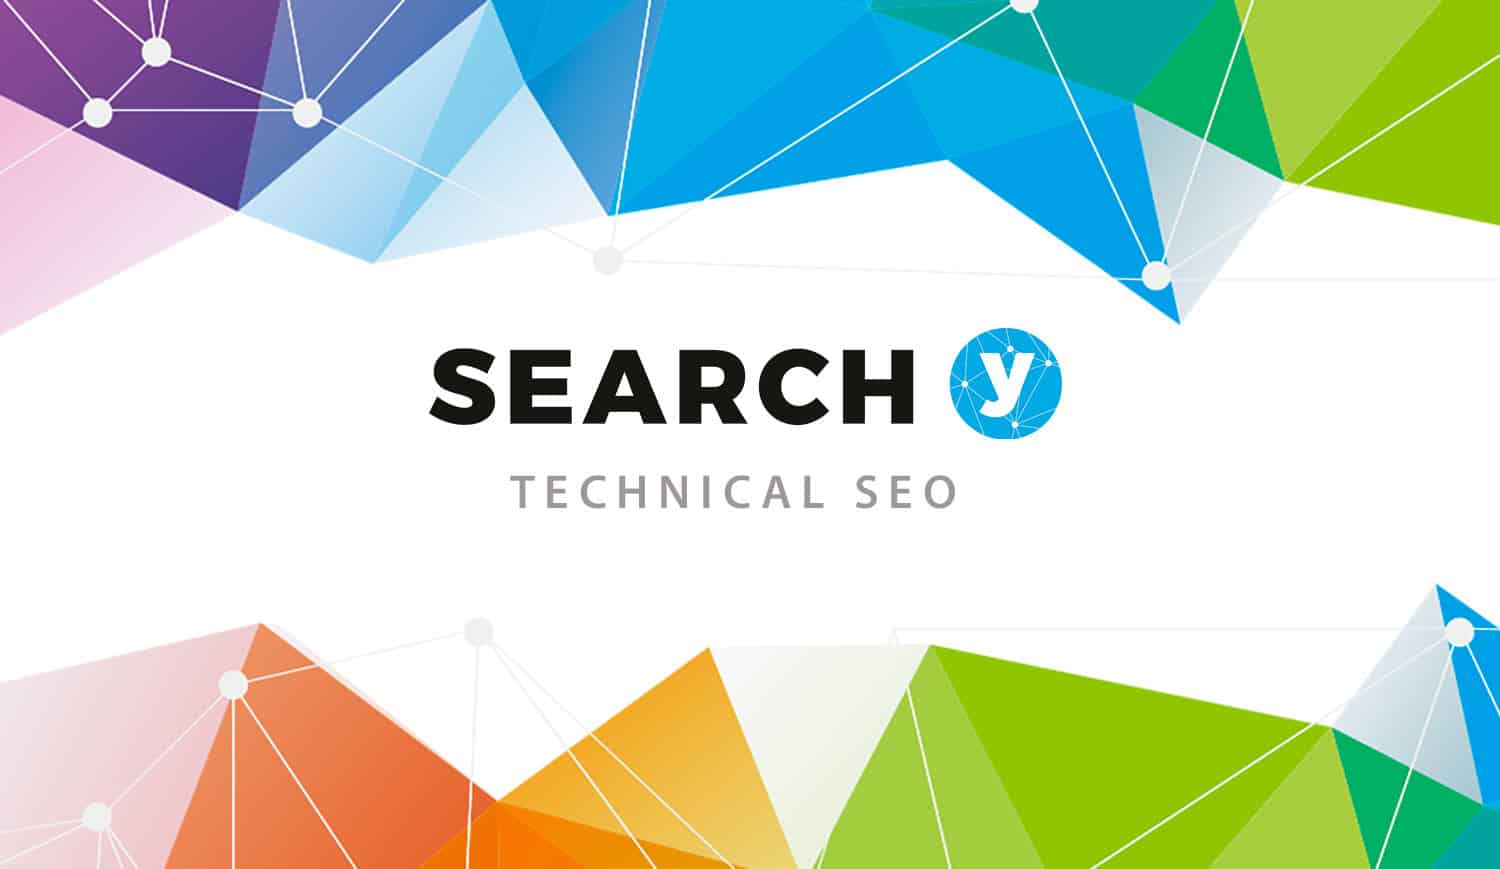 Search Y Technical SEO